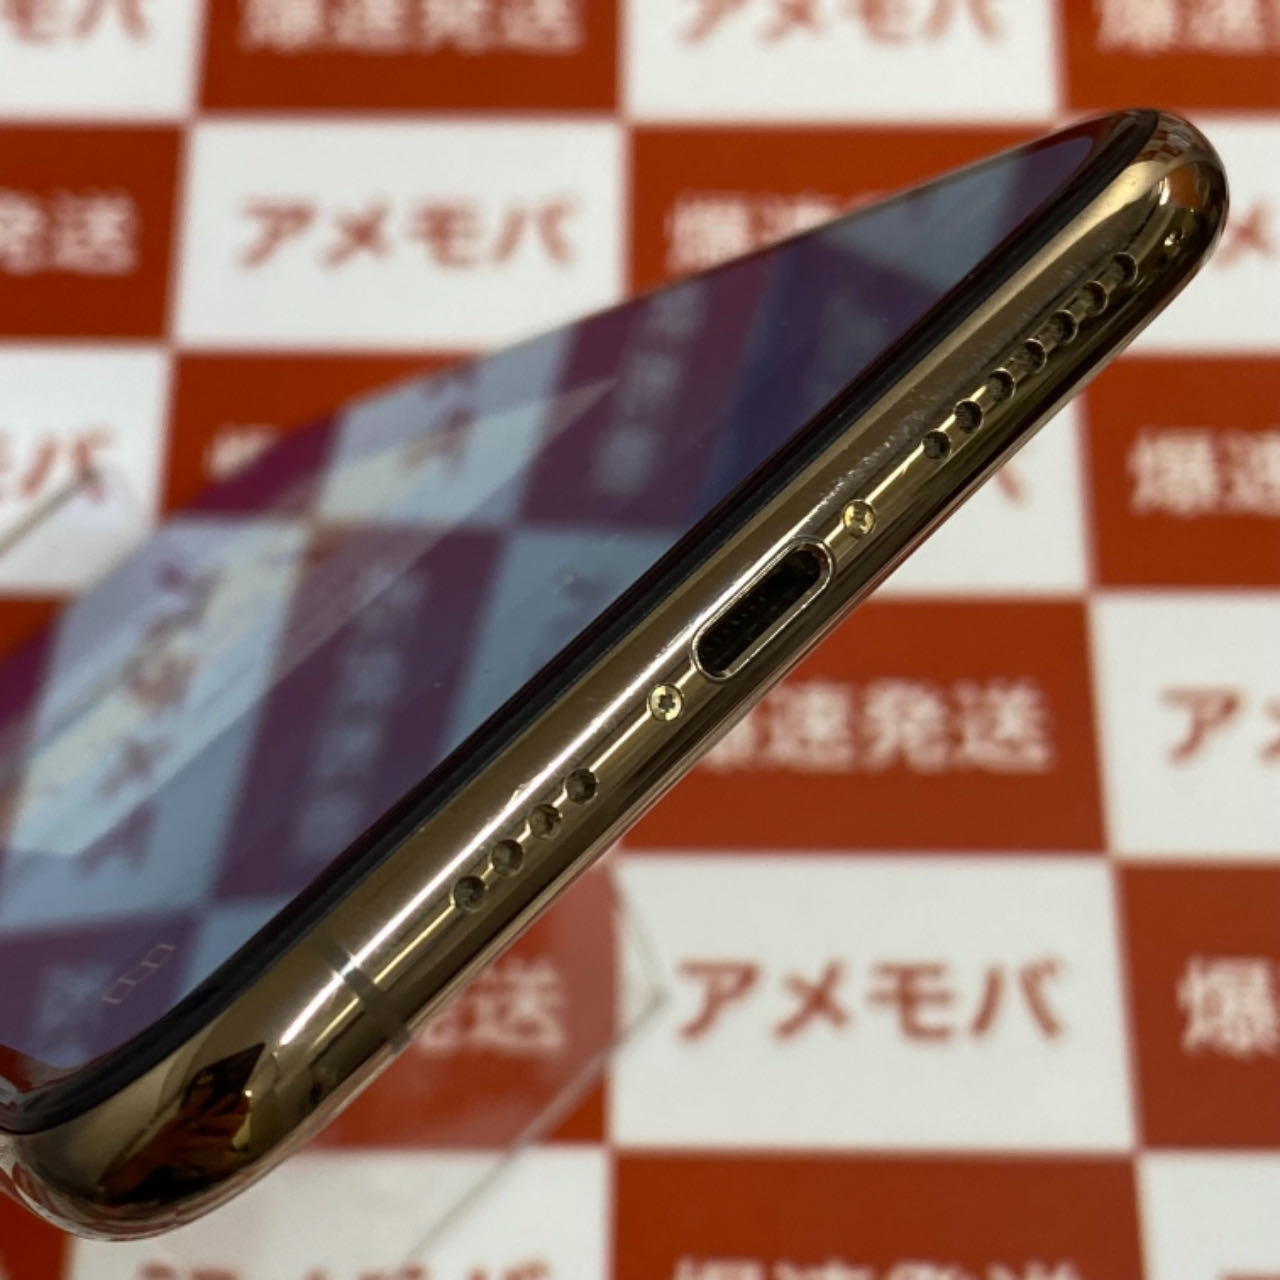 iPhone 11 Pro Max｜価格比較・SIMフリー・最新情報 - 価格.com